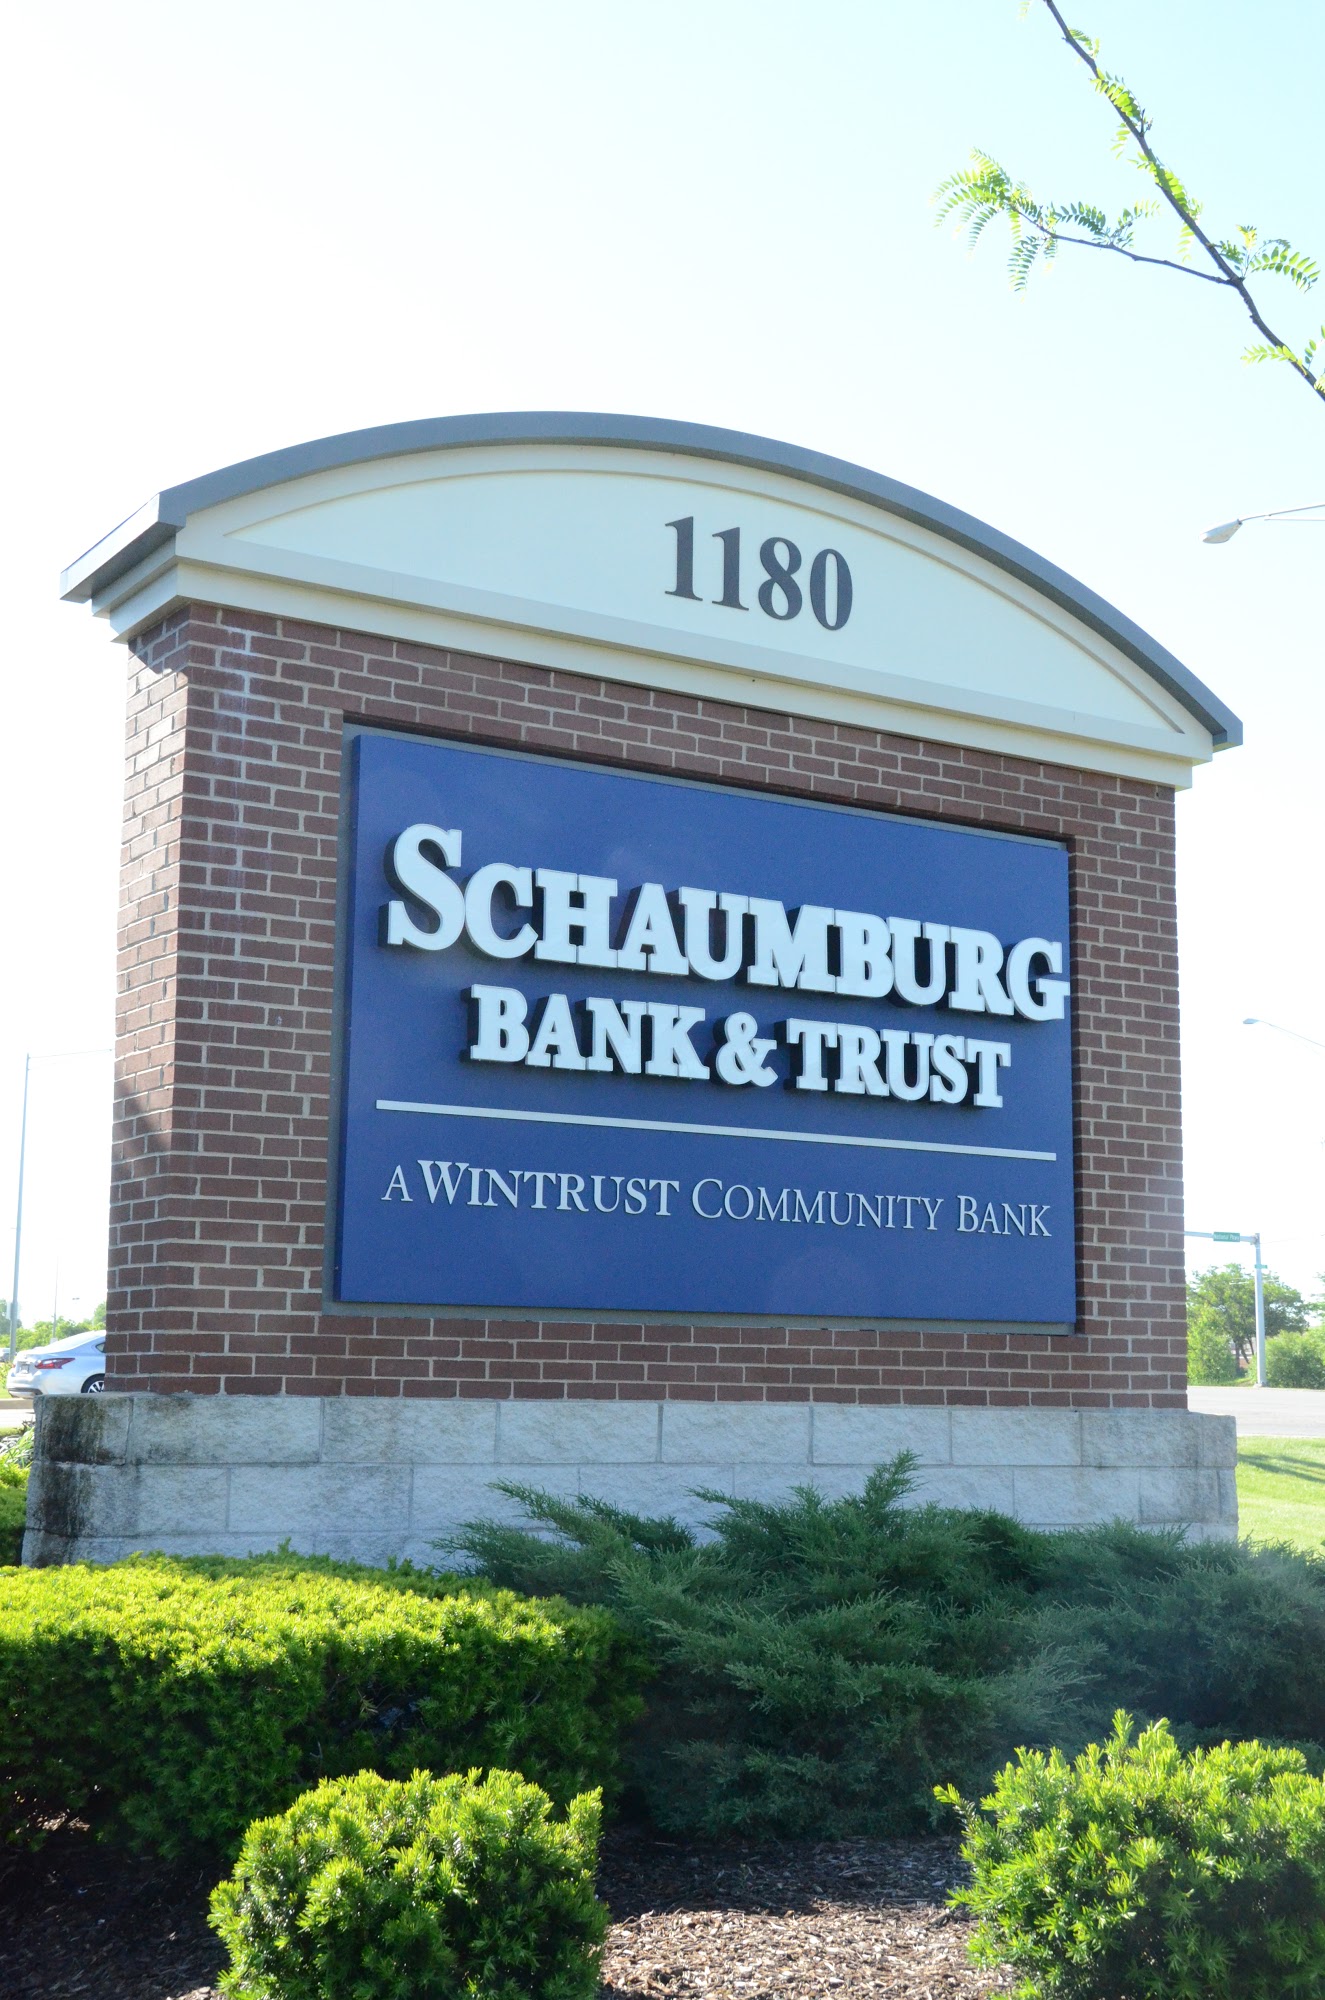 Schaumburg Bank & Trust